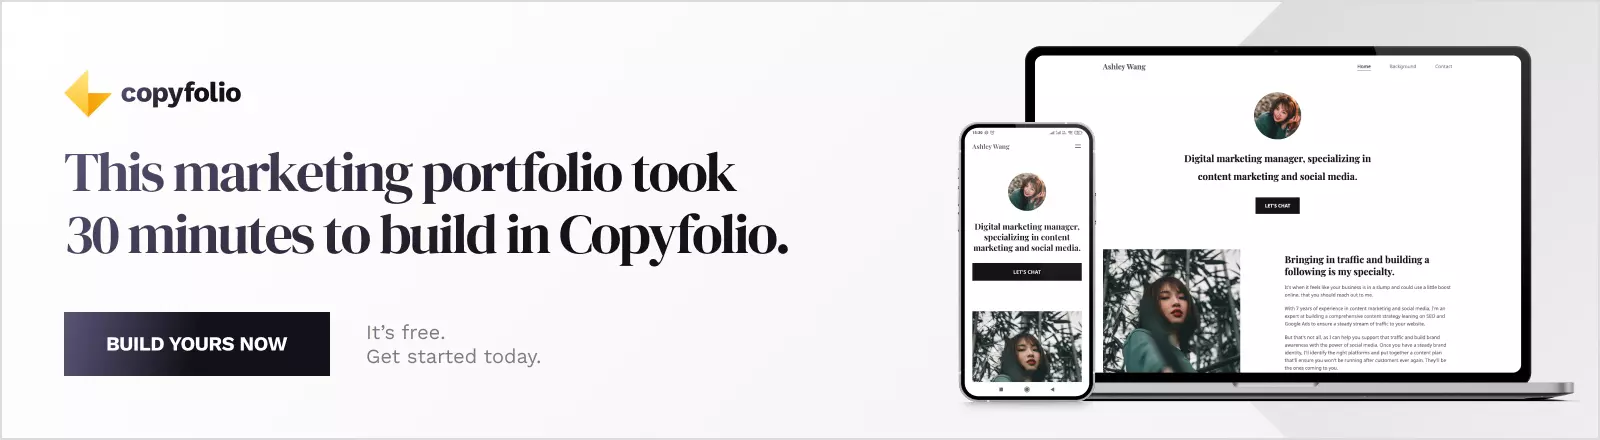 This marketing portfolio took 30 minutes to build in Copyfolio. Build yours now, it's free.